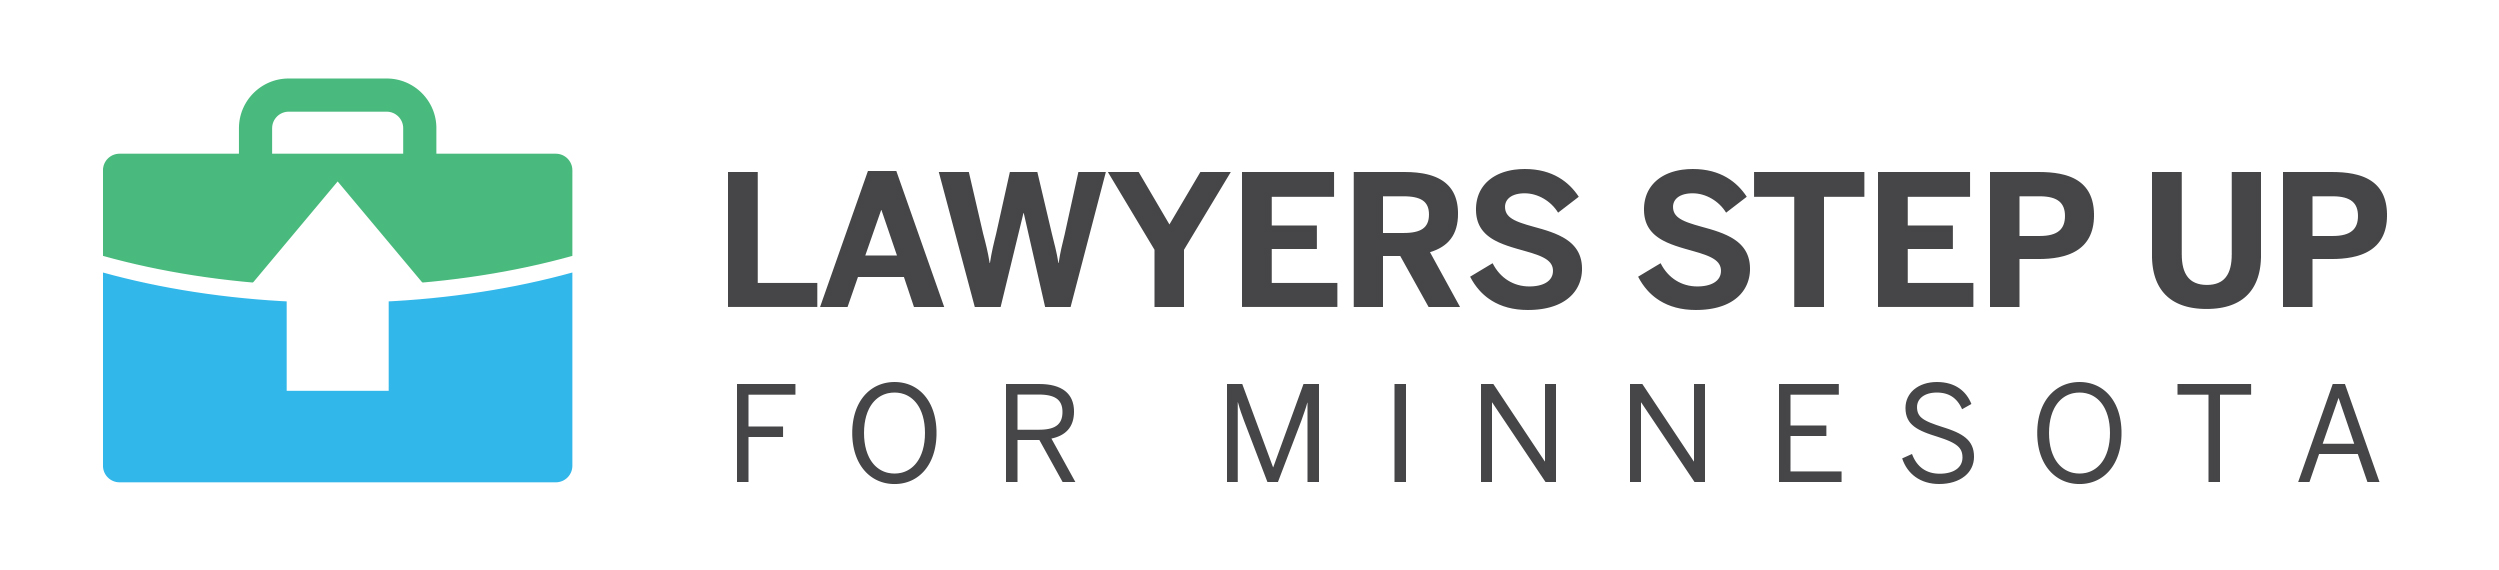 Lawyers Step Up Logo Horizontal